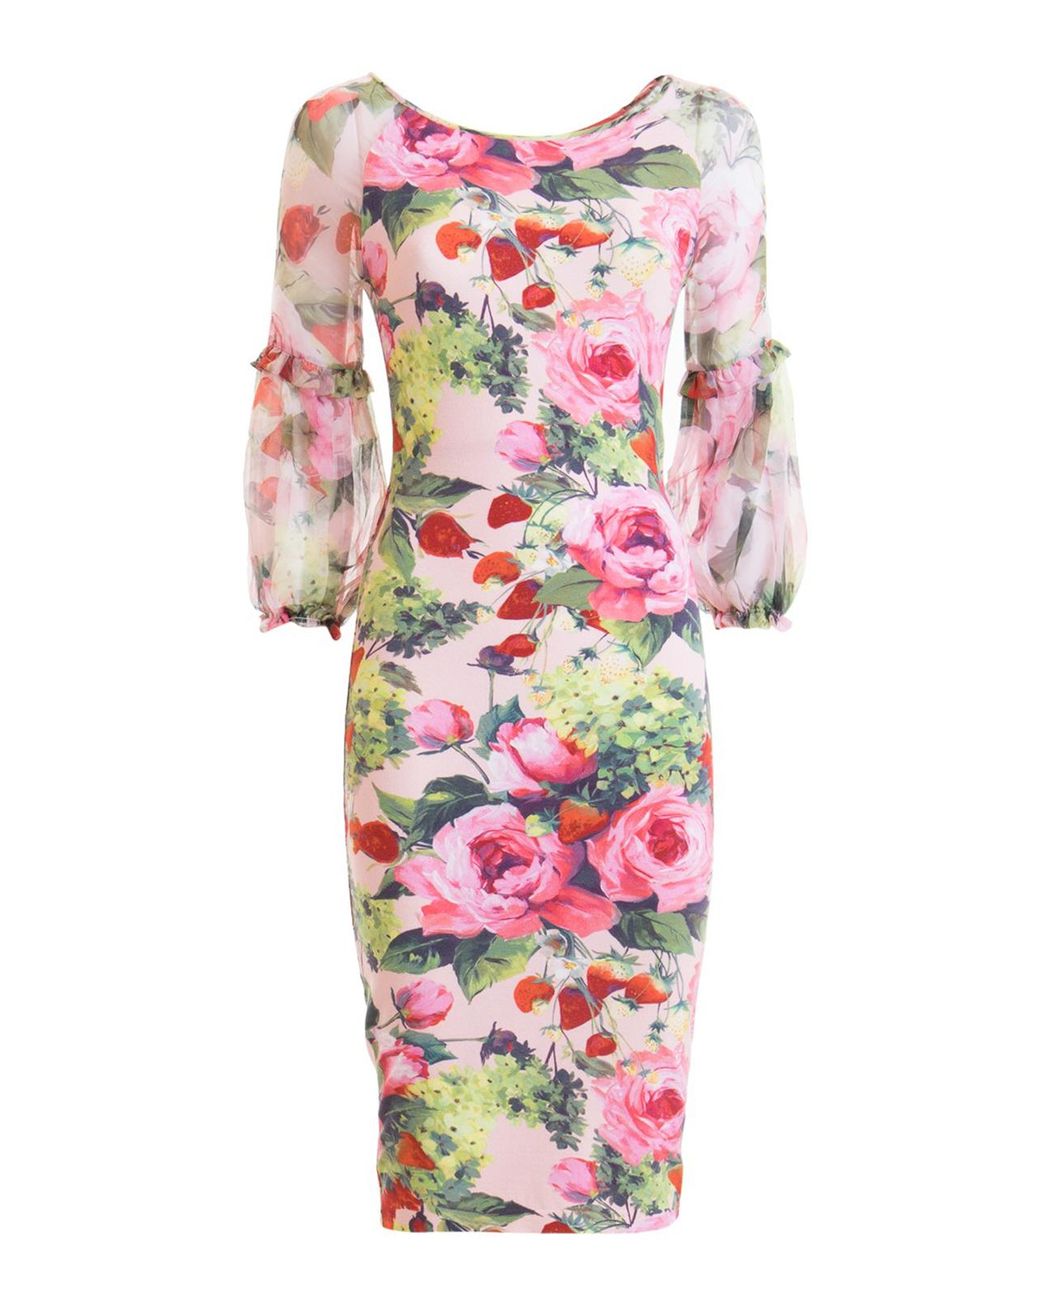 Blumarine Floral Print Silk Dress in Pink - Lyst